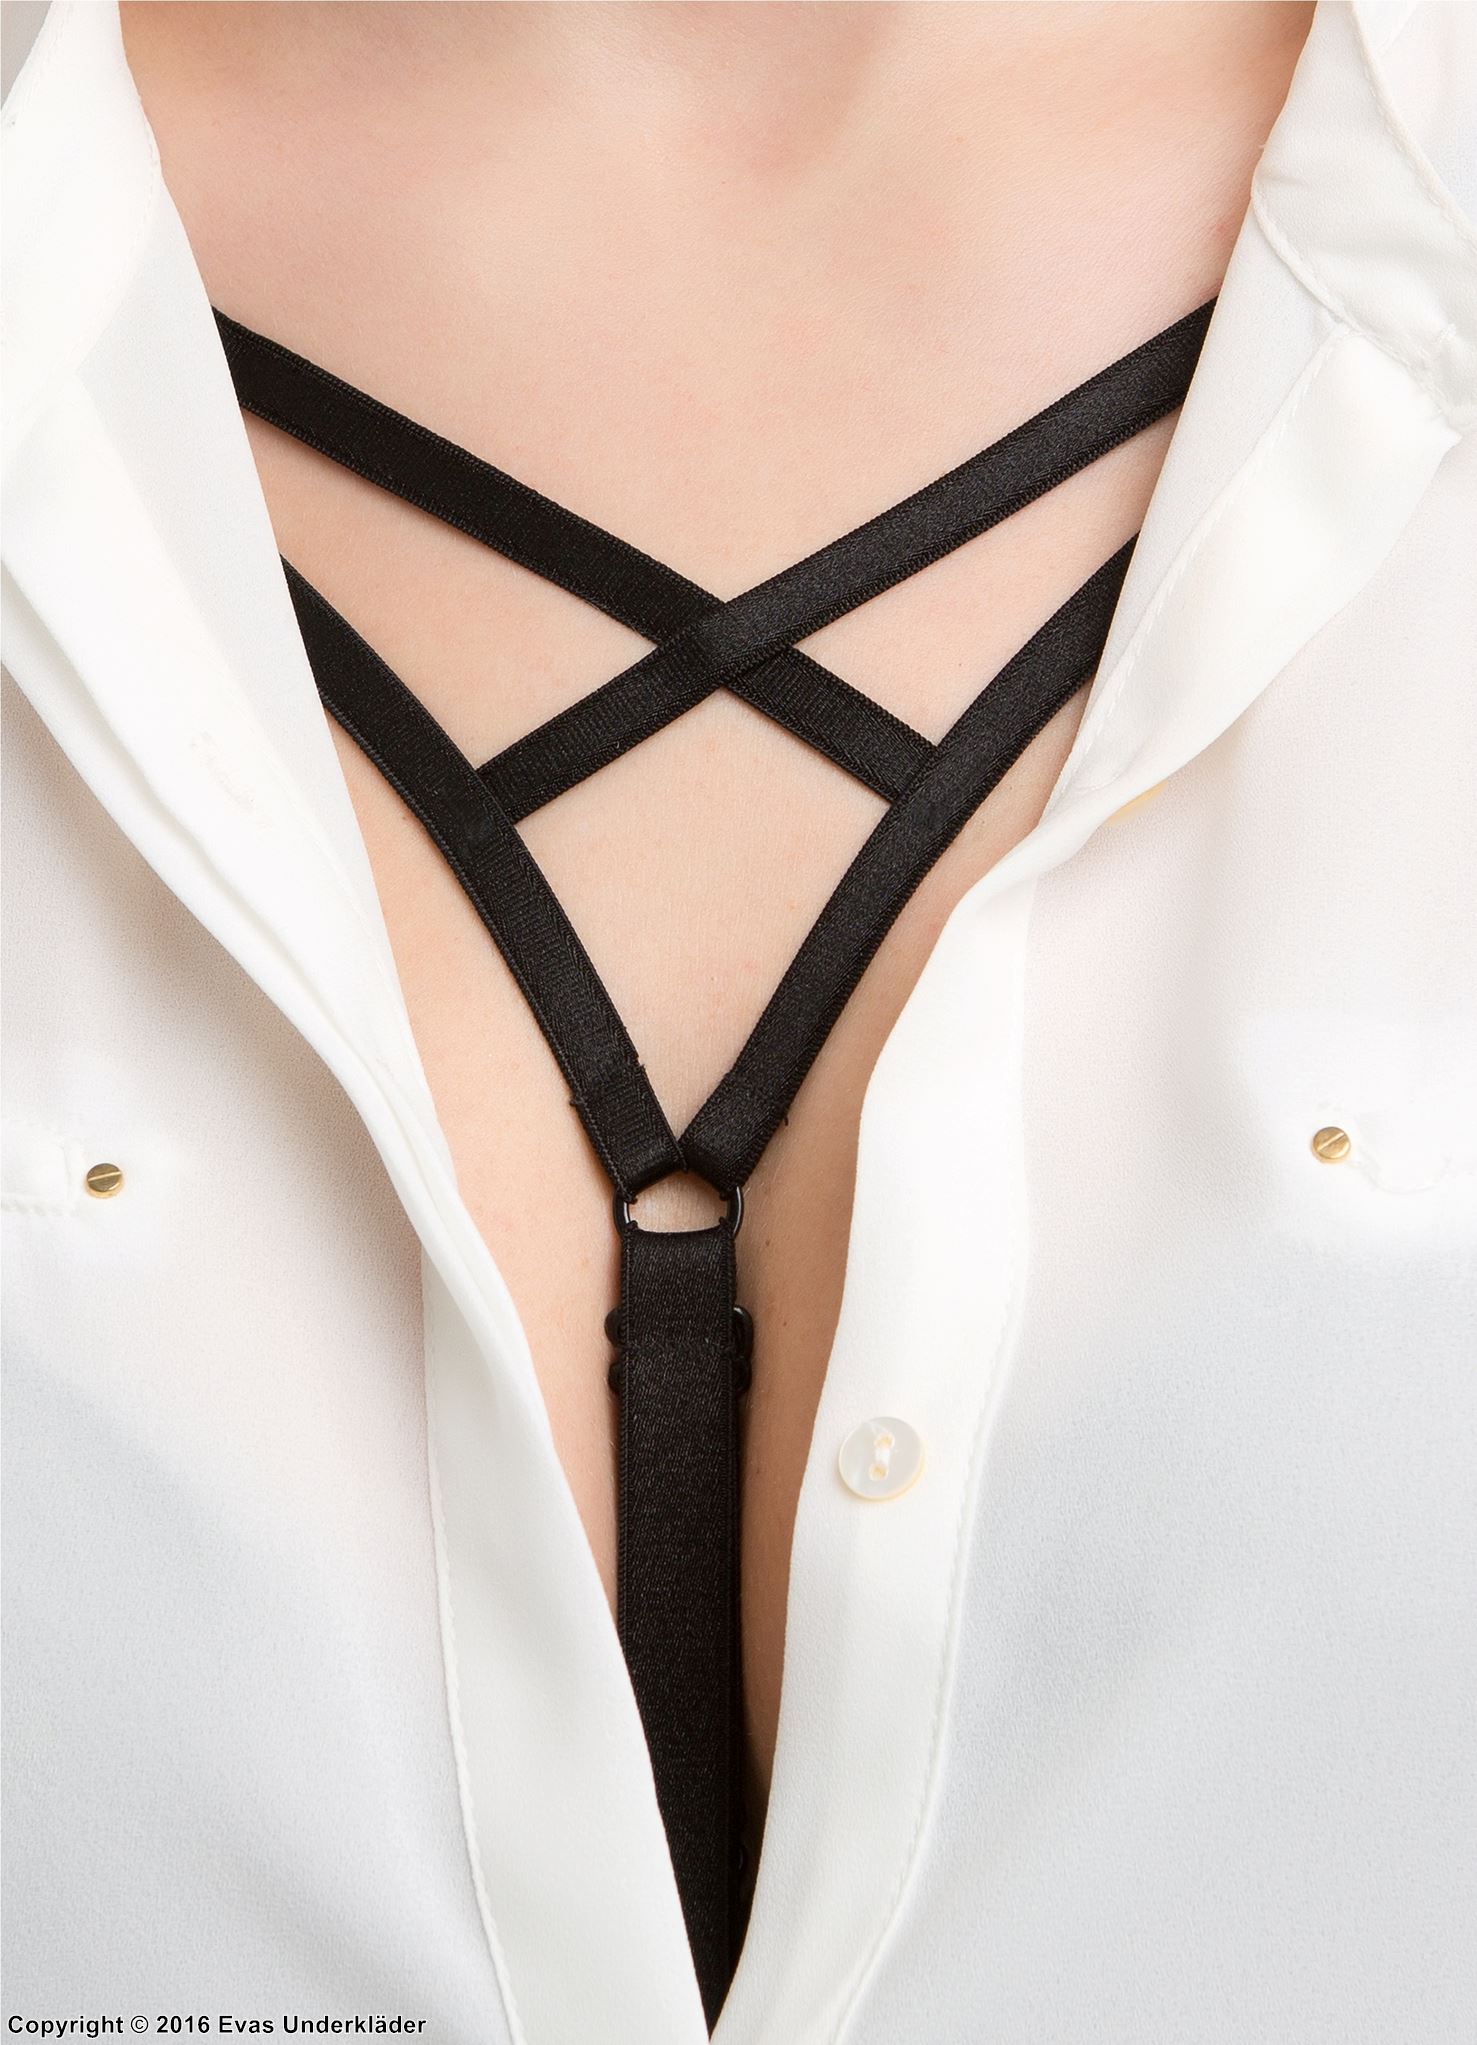 decorative bra straps